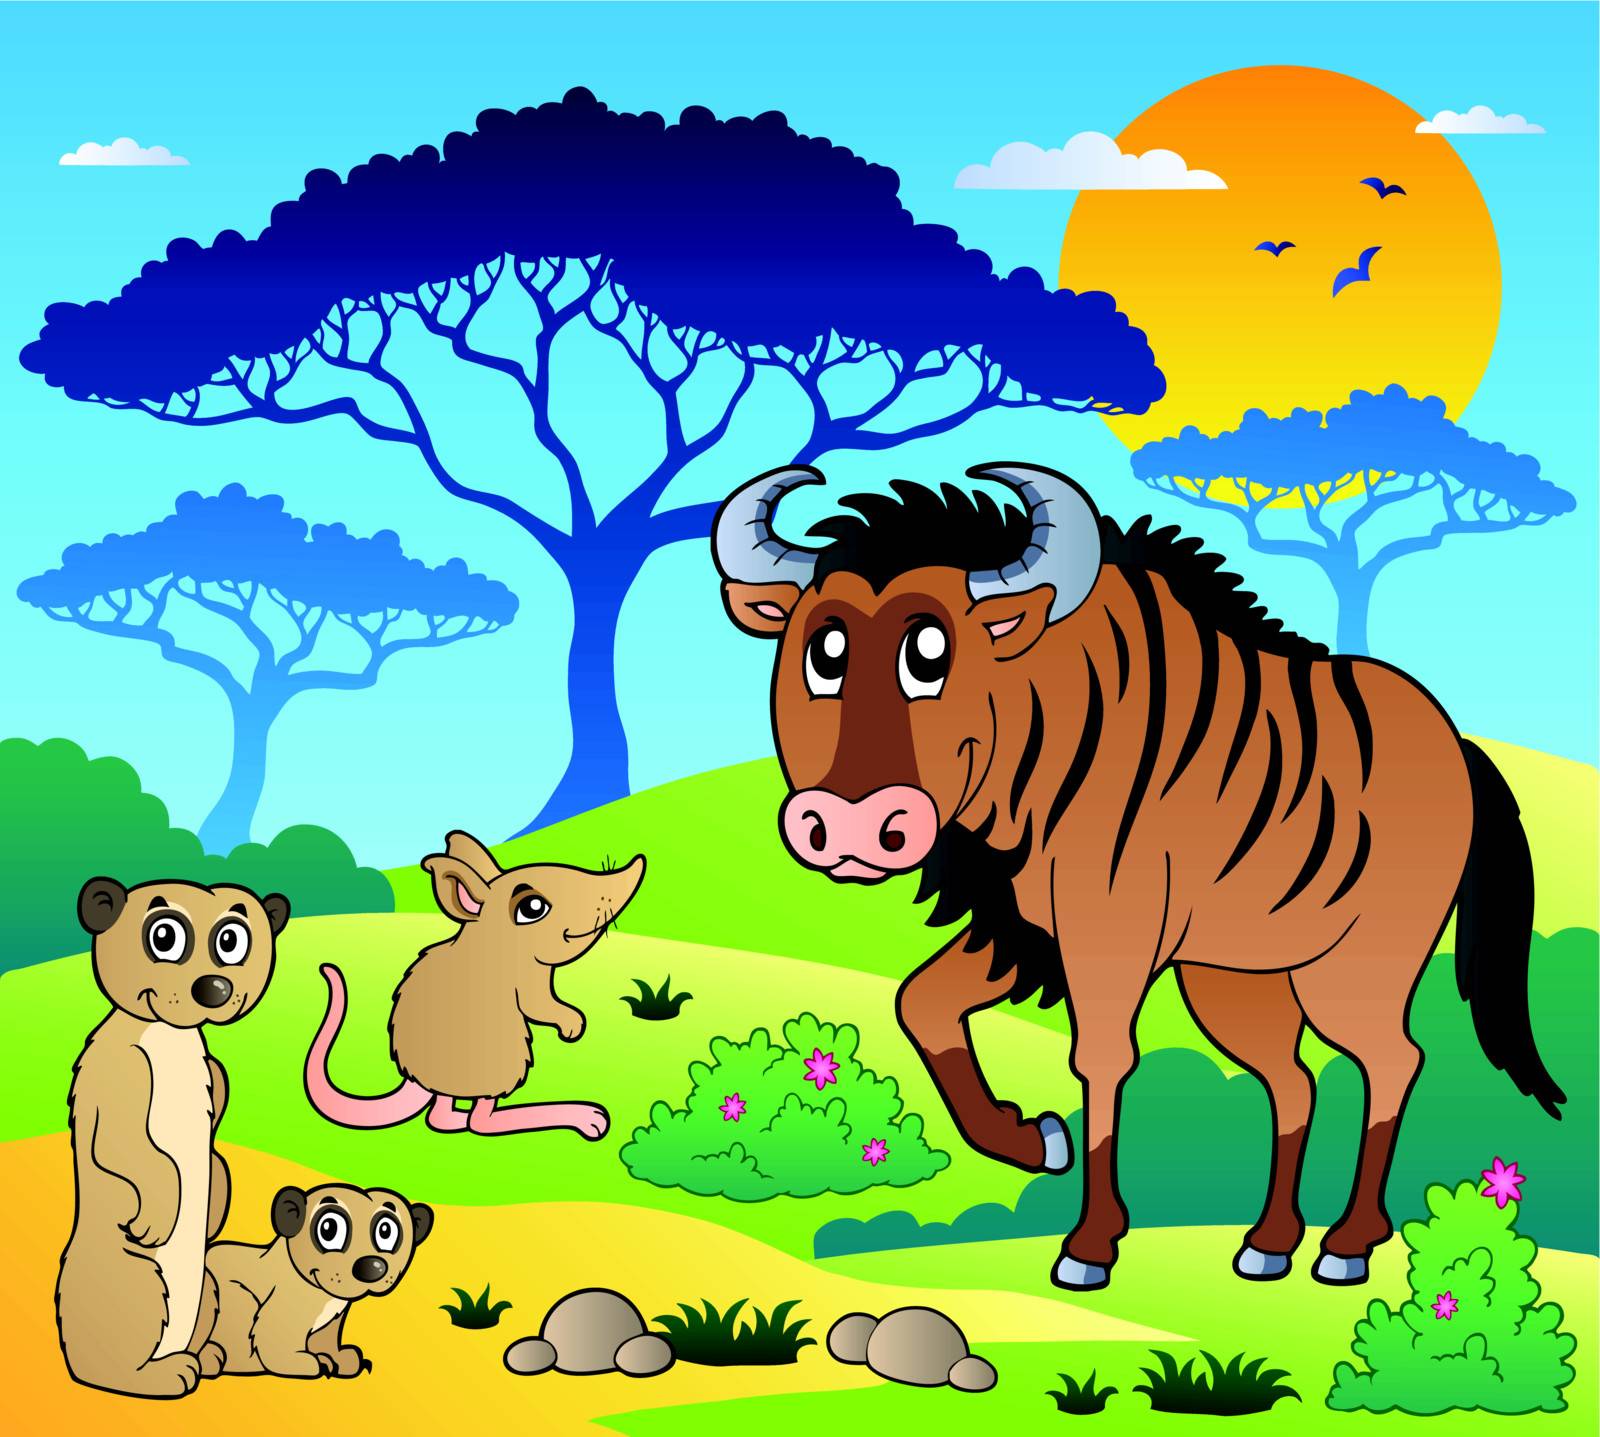 Savannah scenery with animals 3 - vector illustration.